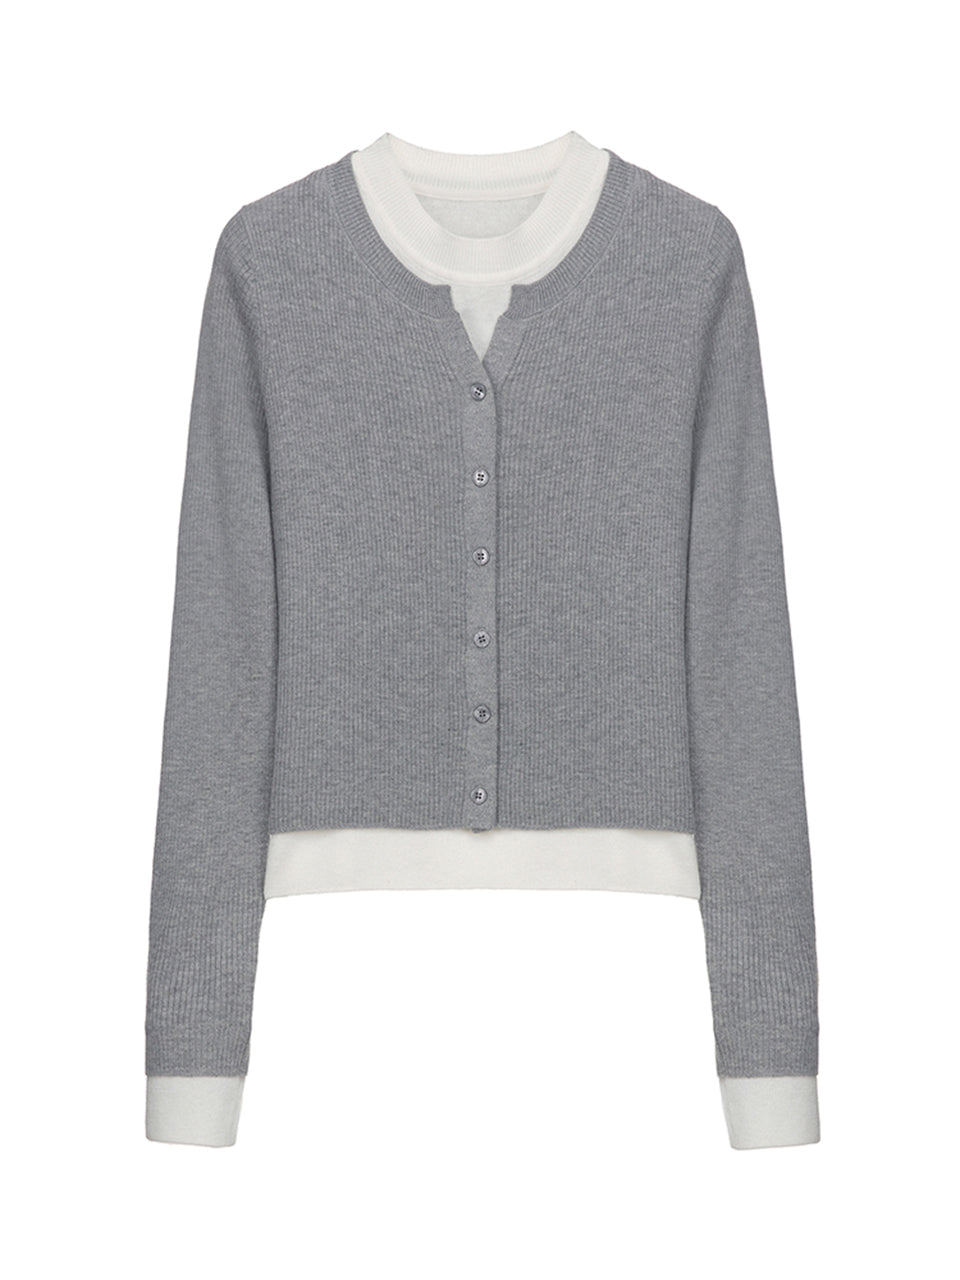 Layered Knit Cardigan Set in Grey